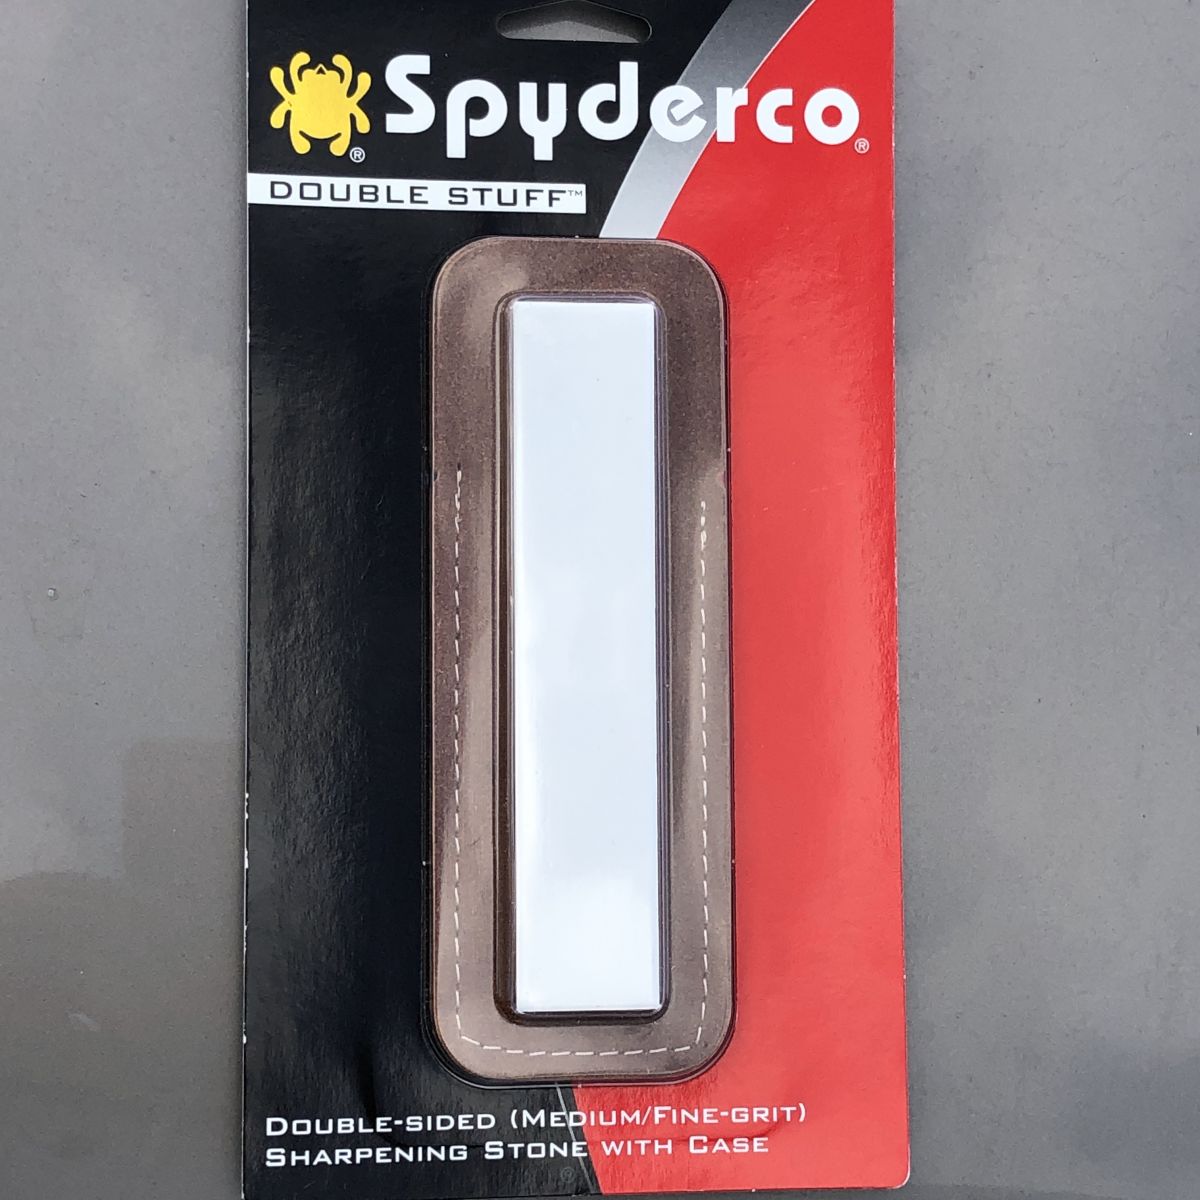 Spyderco Pocket Sharpening Stones. Double Stuff 2 